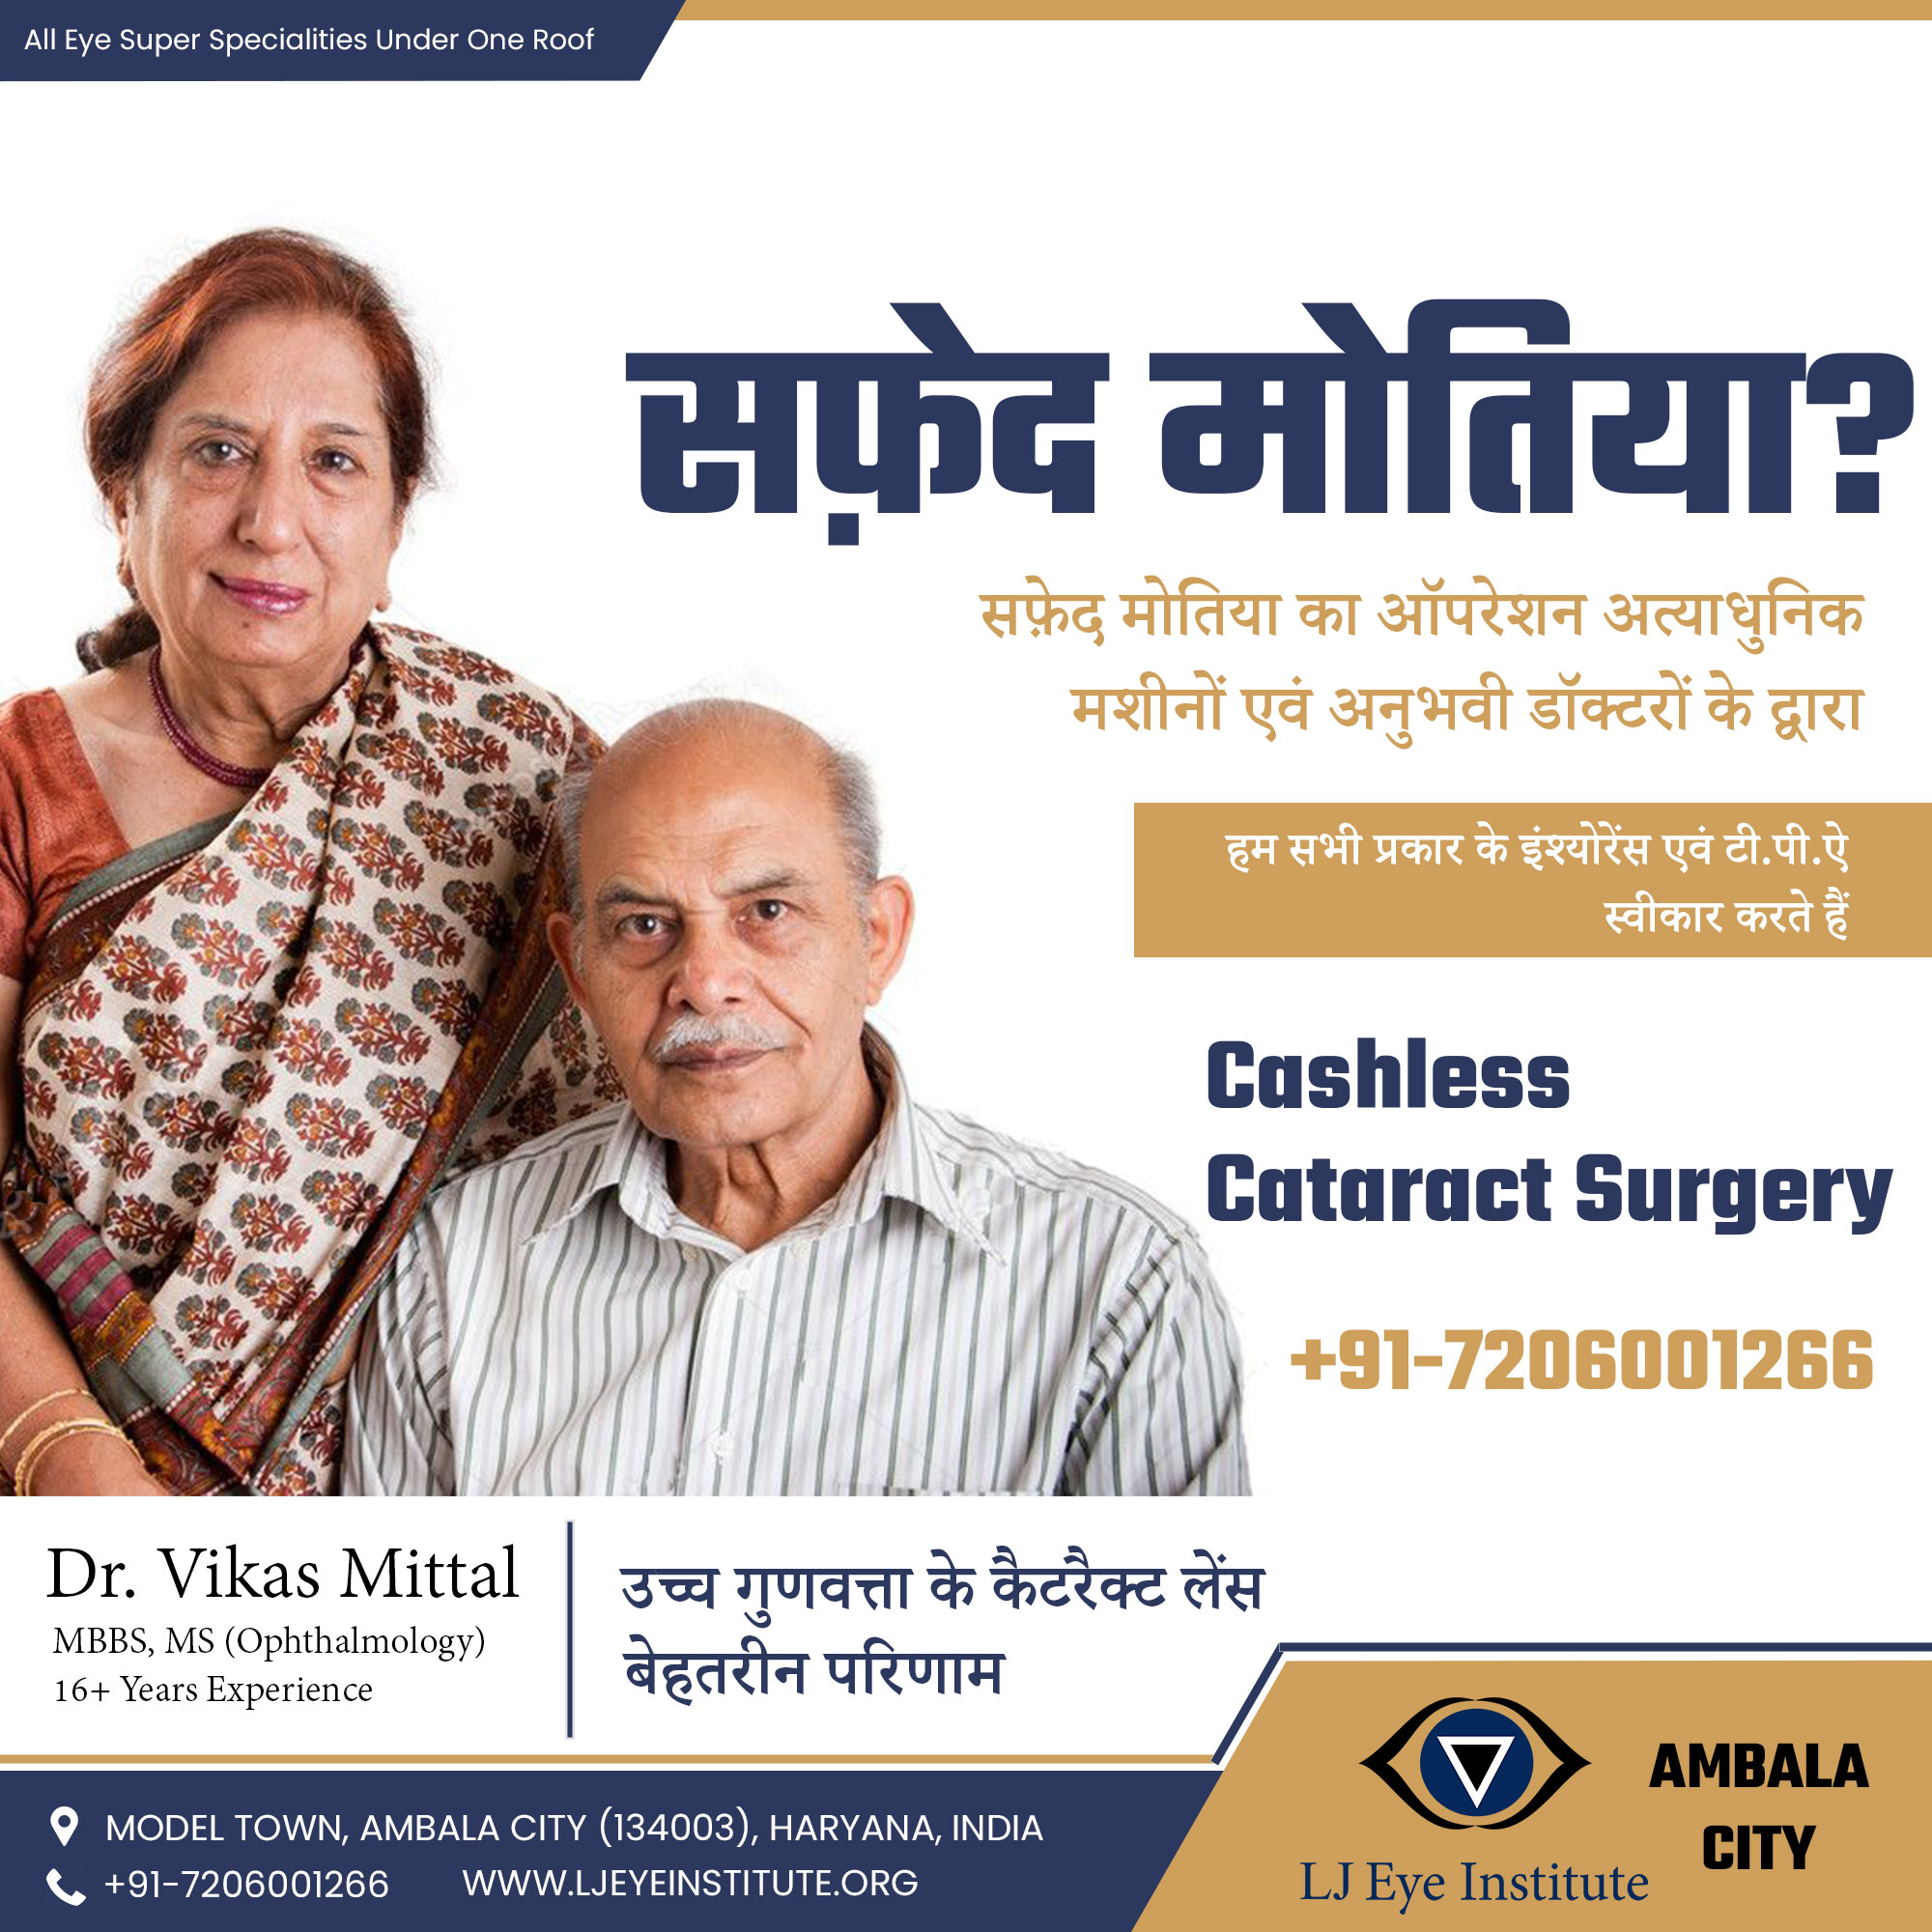 Cashless Cataract Surgery in Ambala | LJ Eye Institute